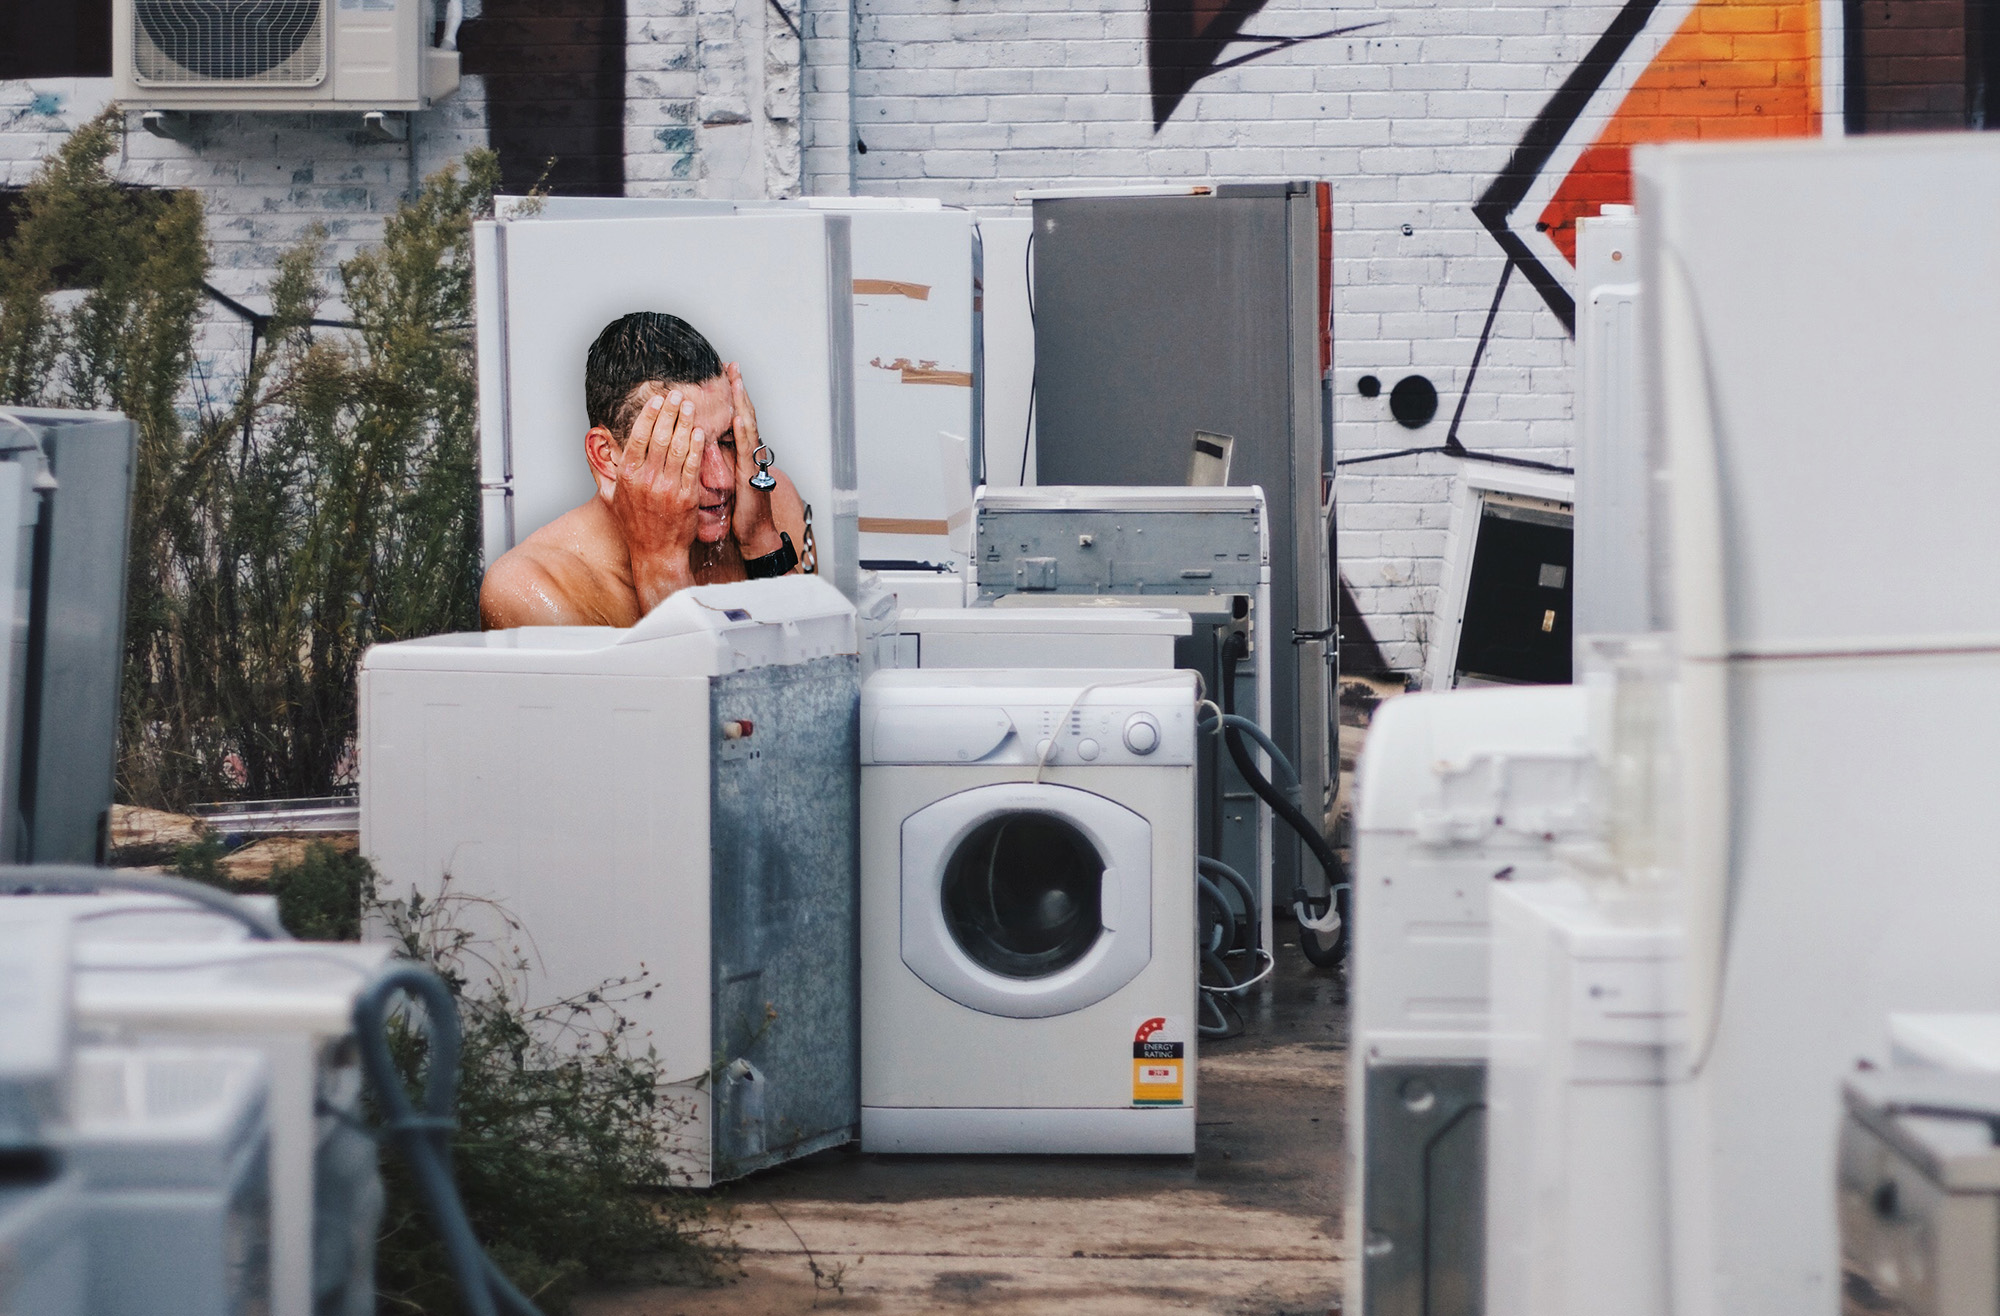 Mathieu van der Poel in the Roubaix showers photoshopped behind washing machines.